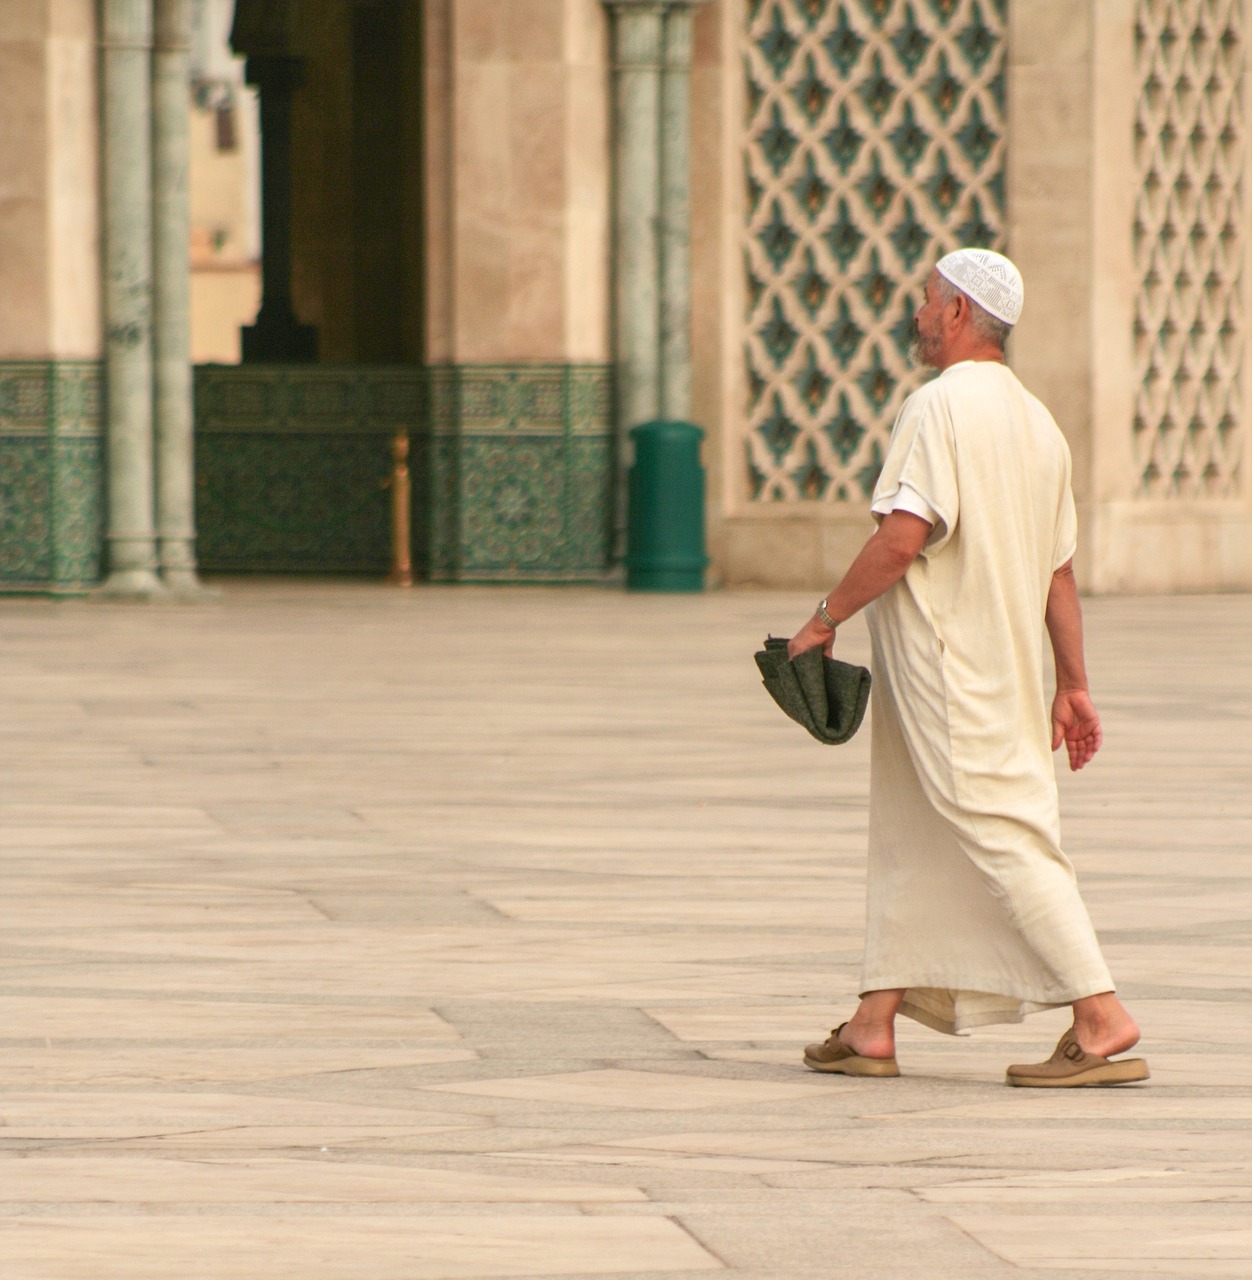 morocco, casablanca, mosque